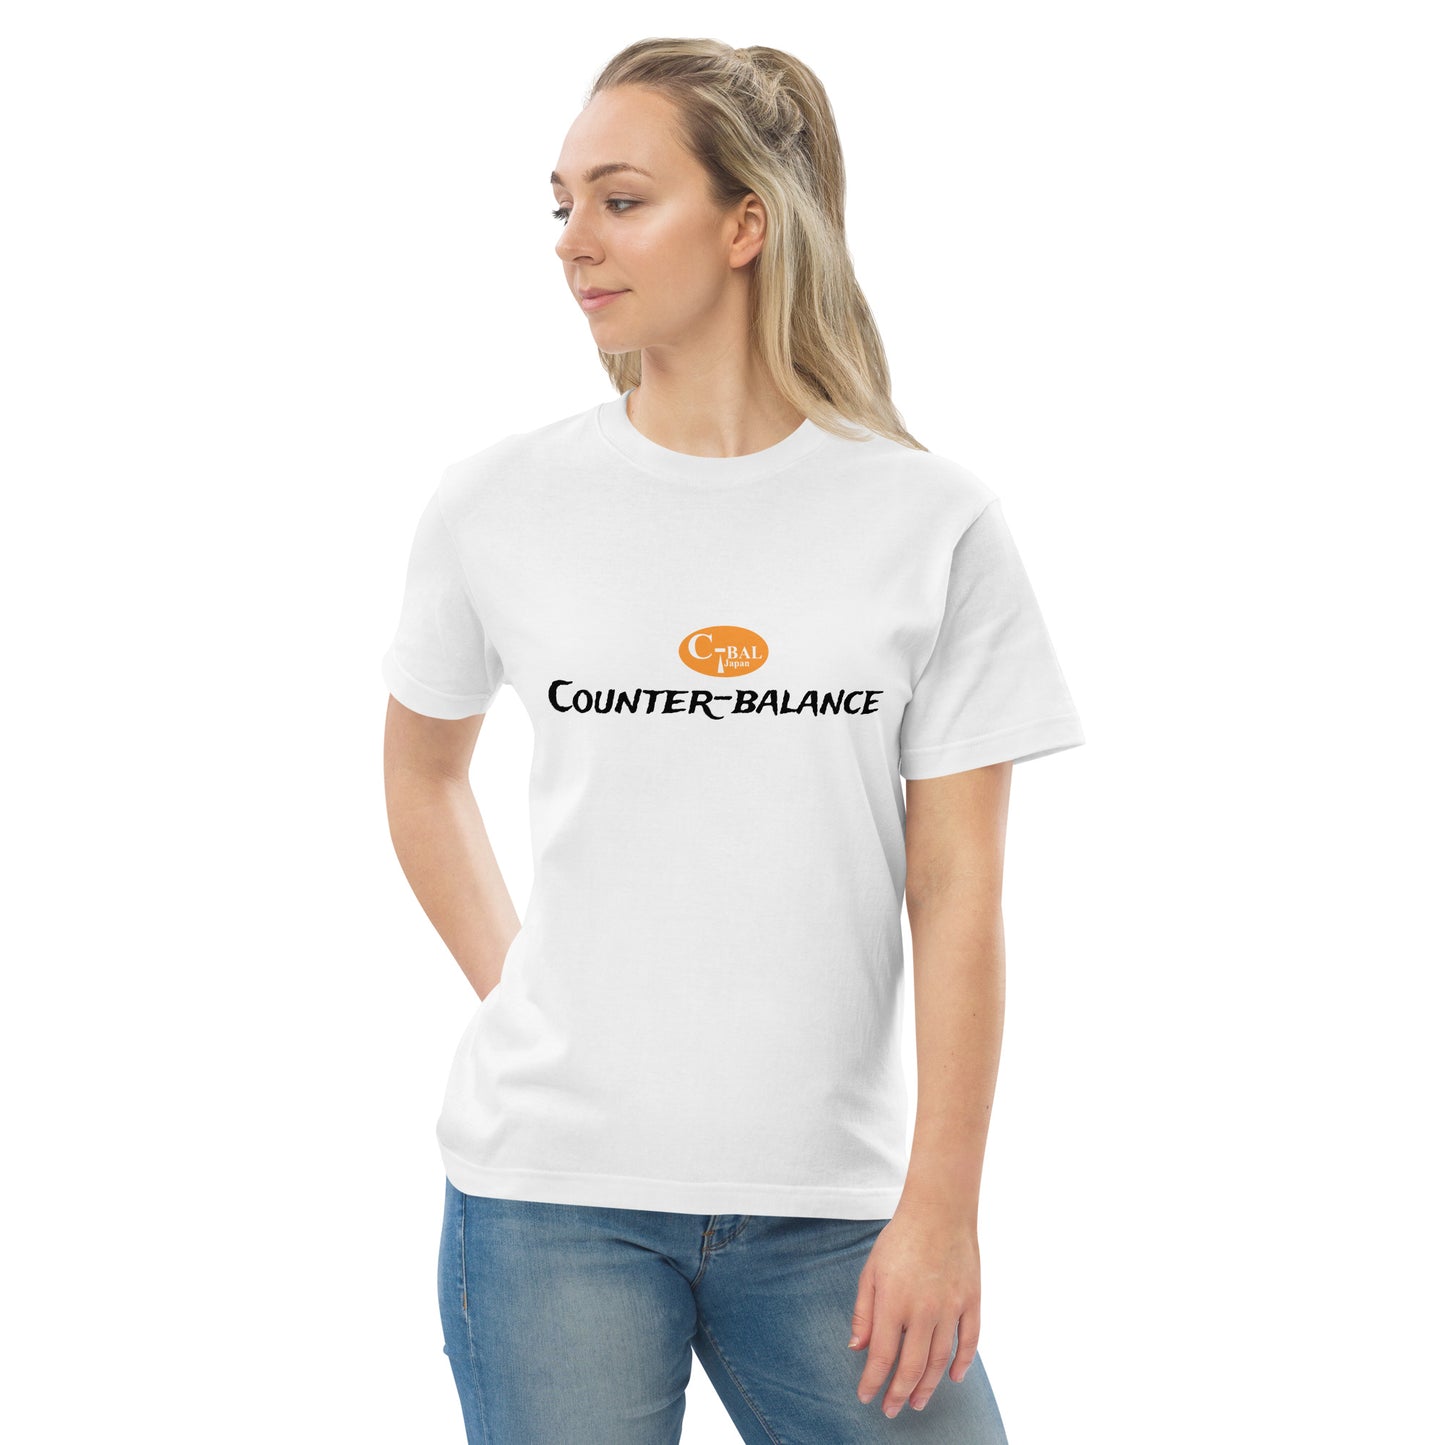 A004 - High Quality Cotton T-shirt (C-BAL : White / Orange)